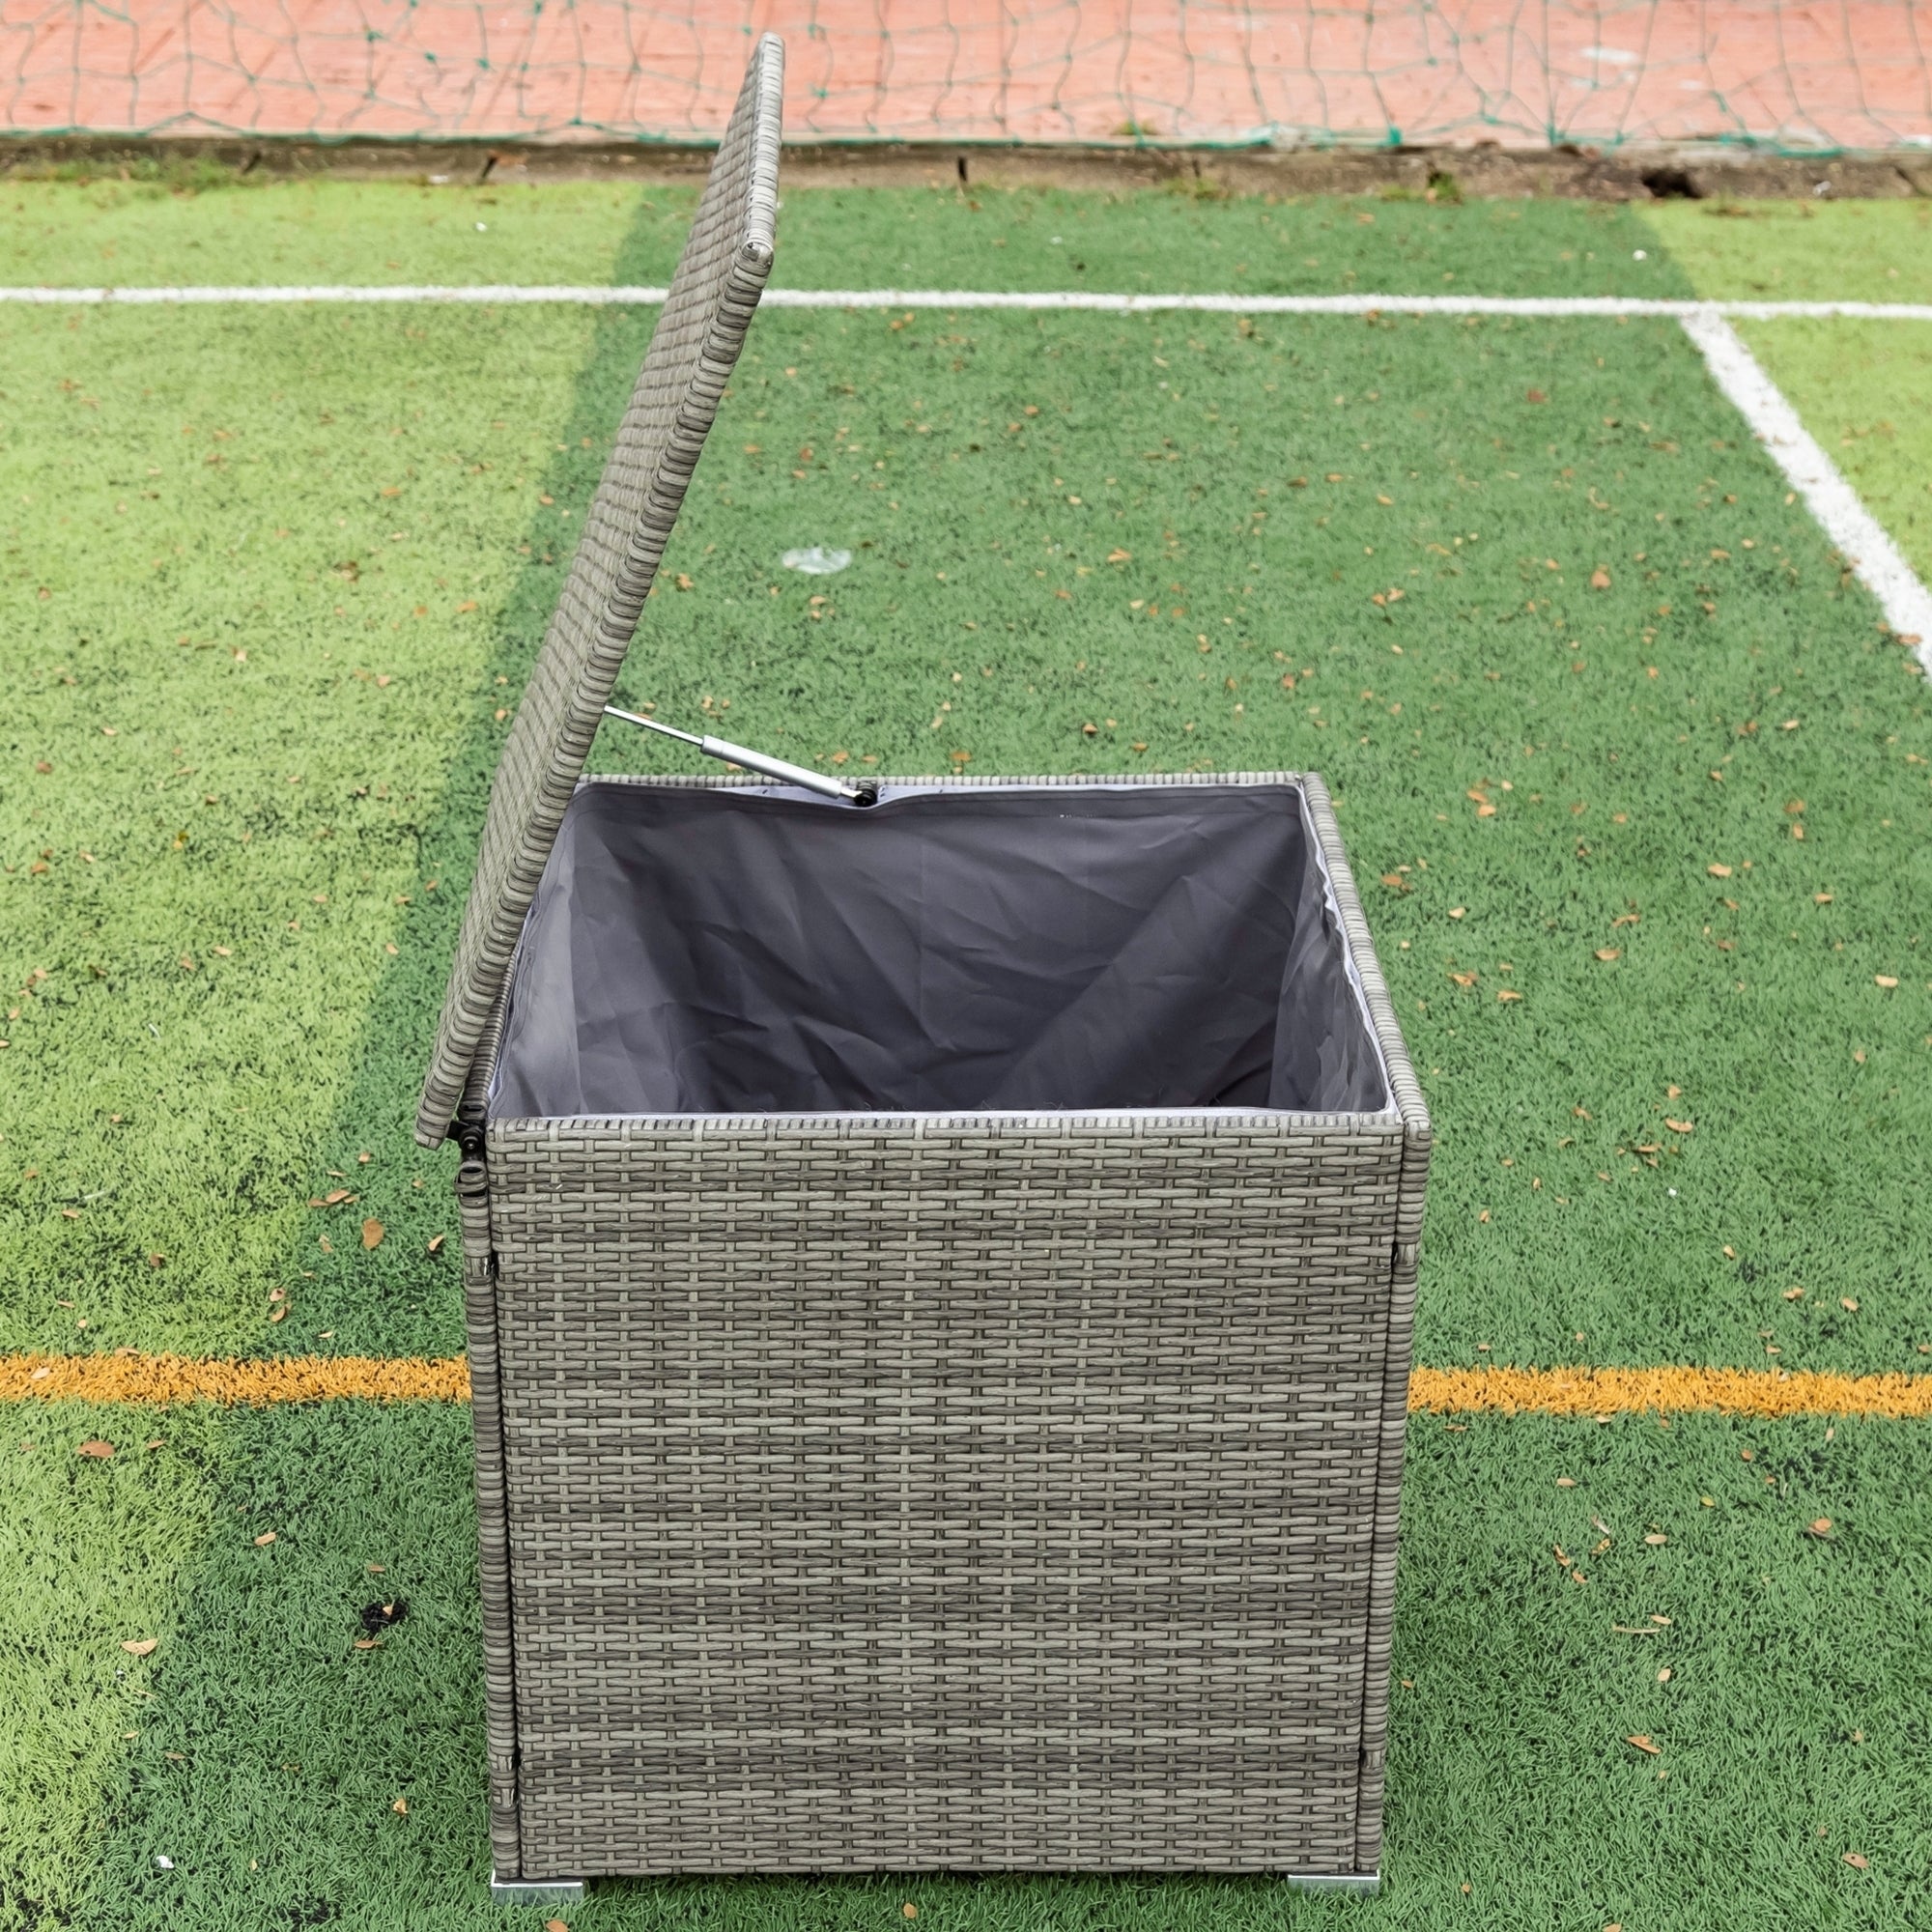 Kensington 4-Pieces Outdoor Patio Sectional Sofa Set